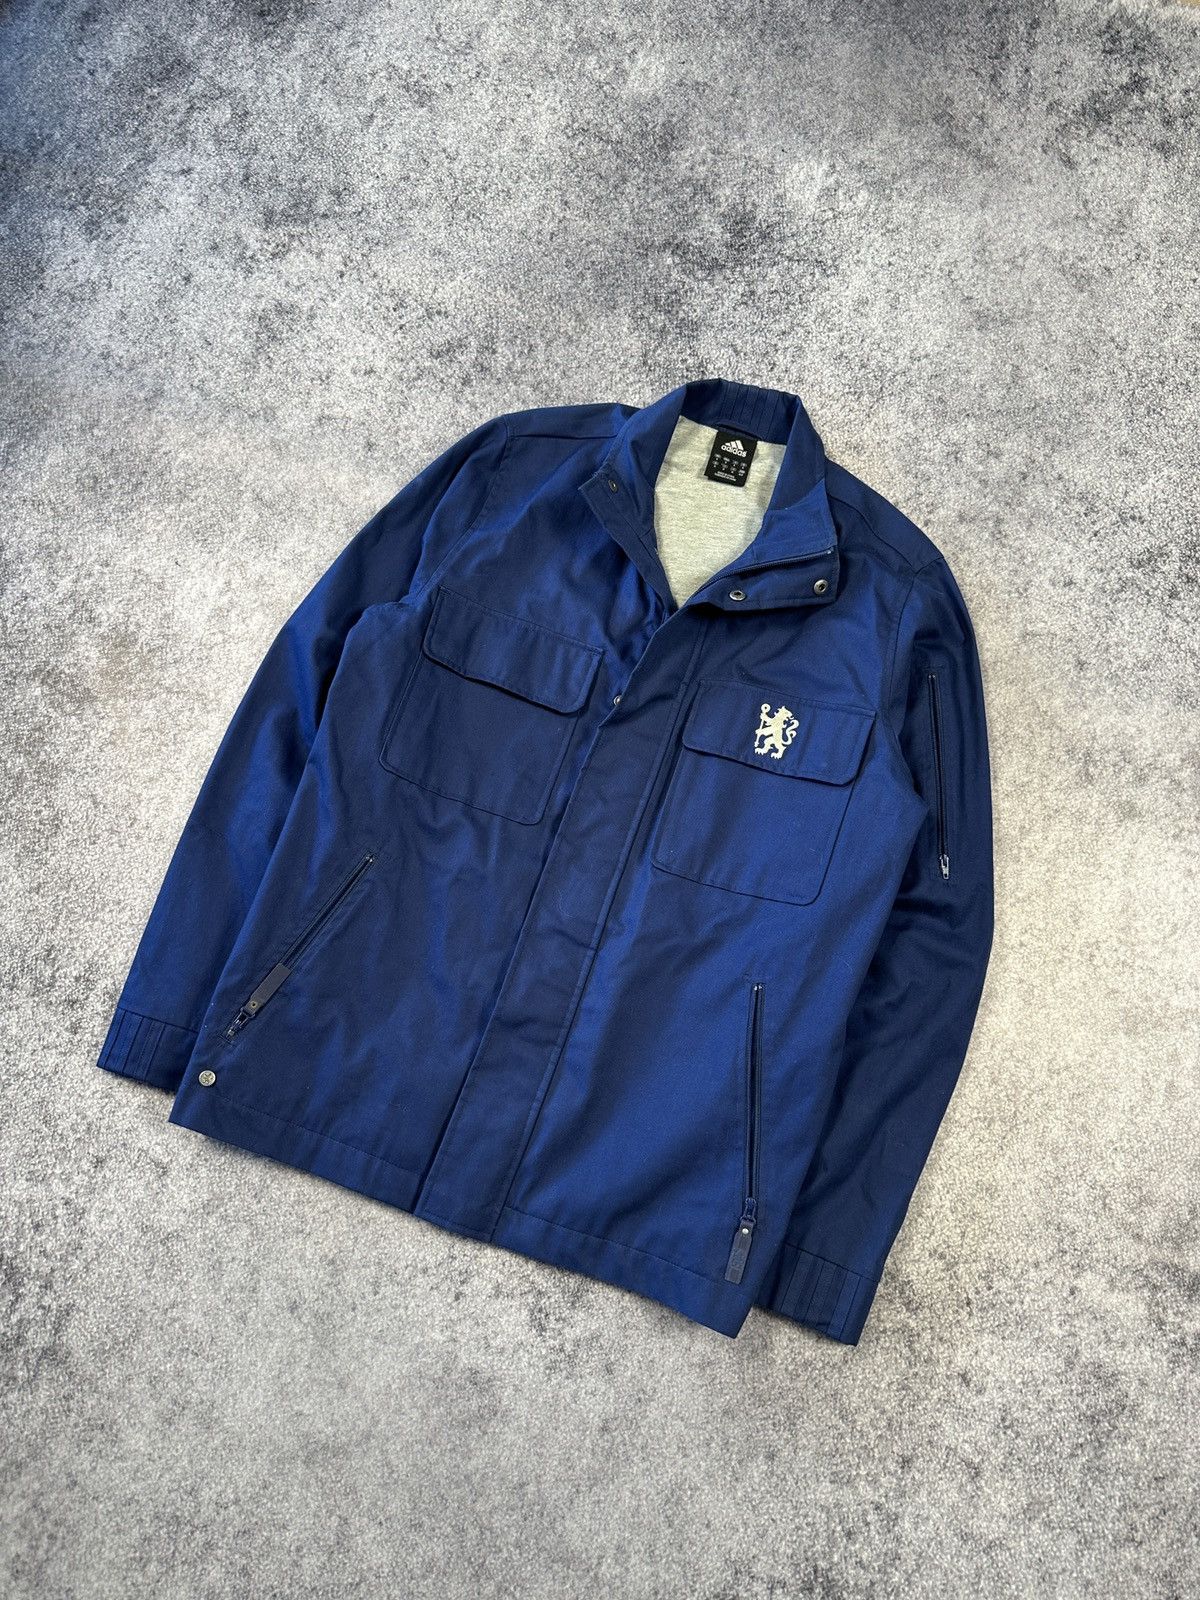 Pre-owned Adidas X Soccer Jersey Vintage Adidas Chelsea Jacket Streetwear Style Soccer S In Dark Blue